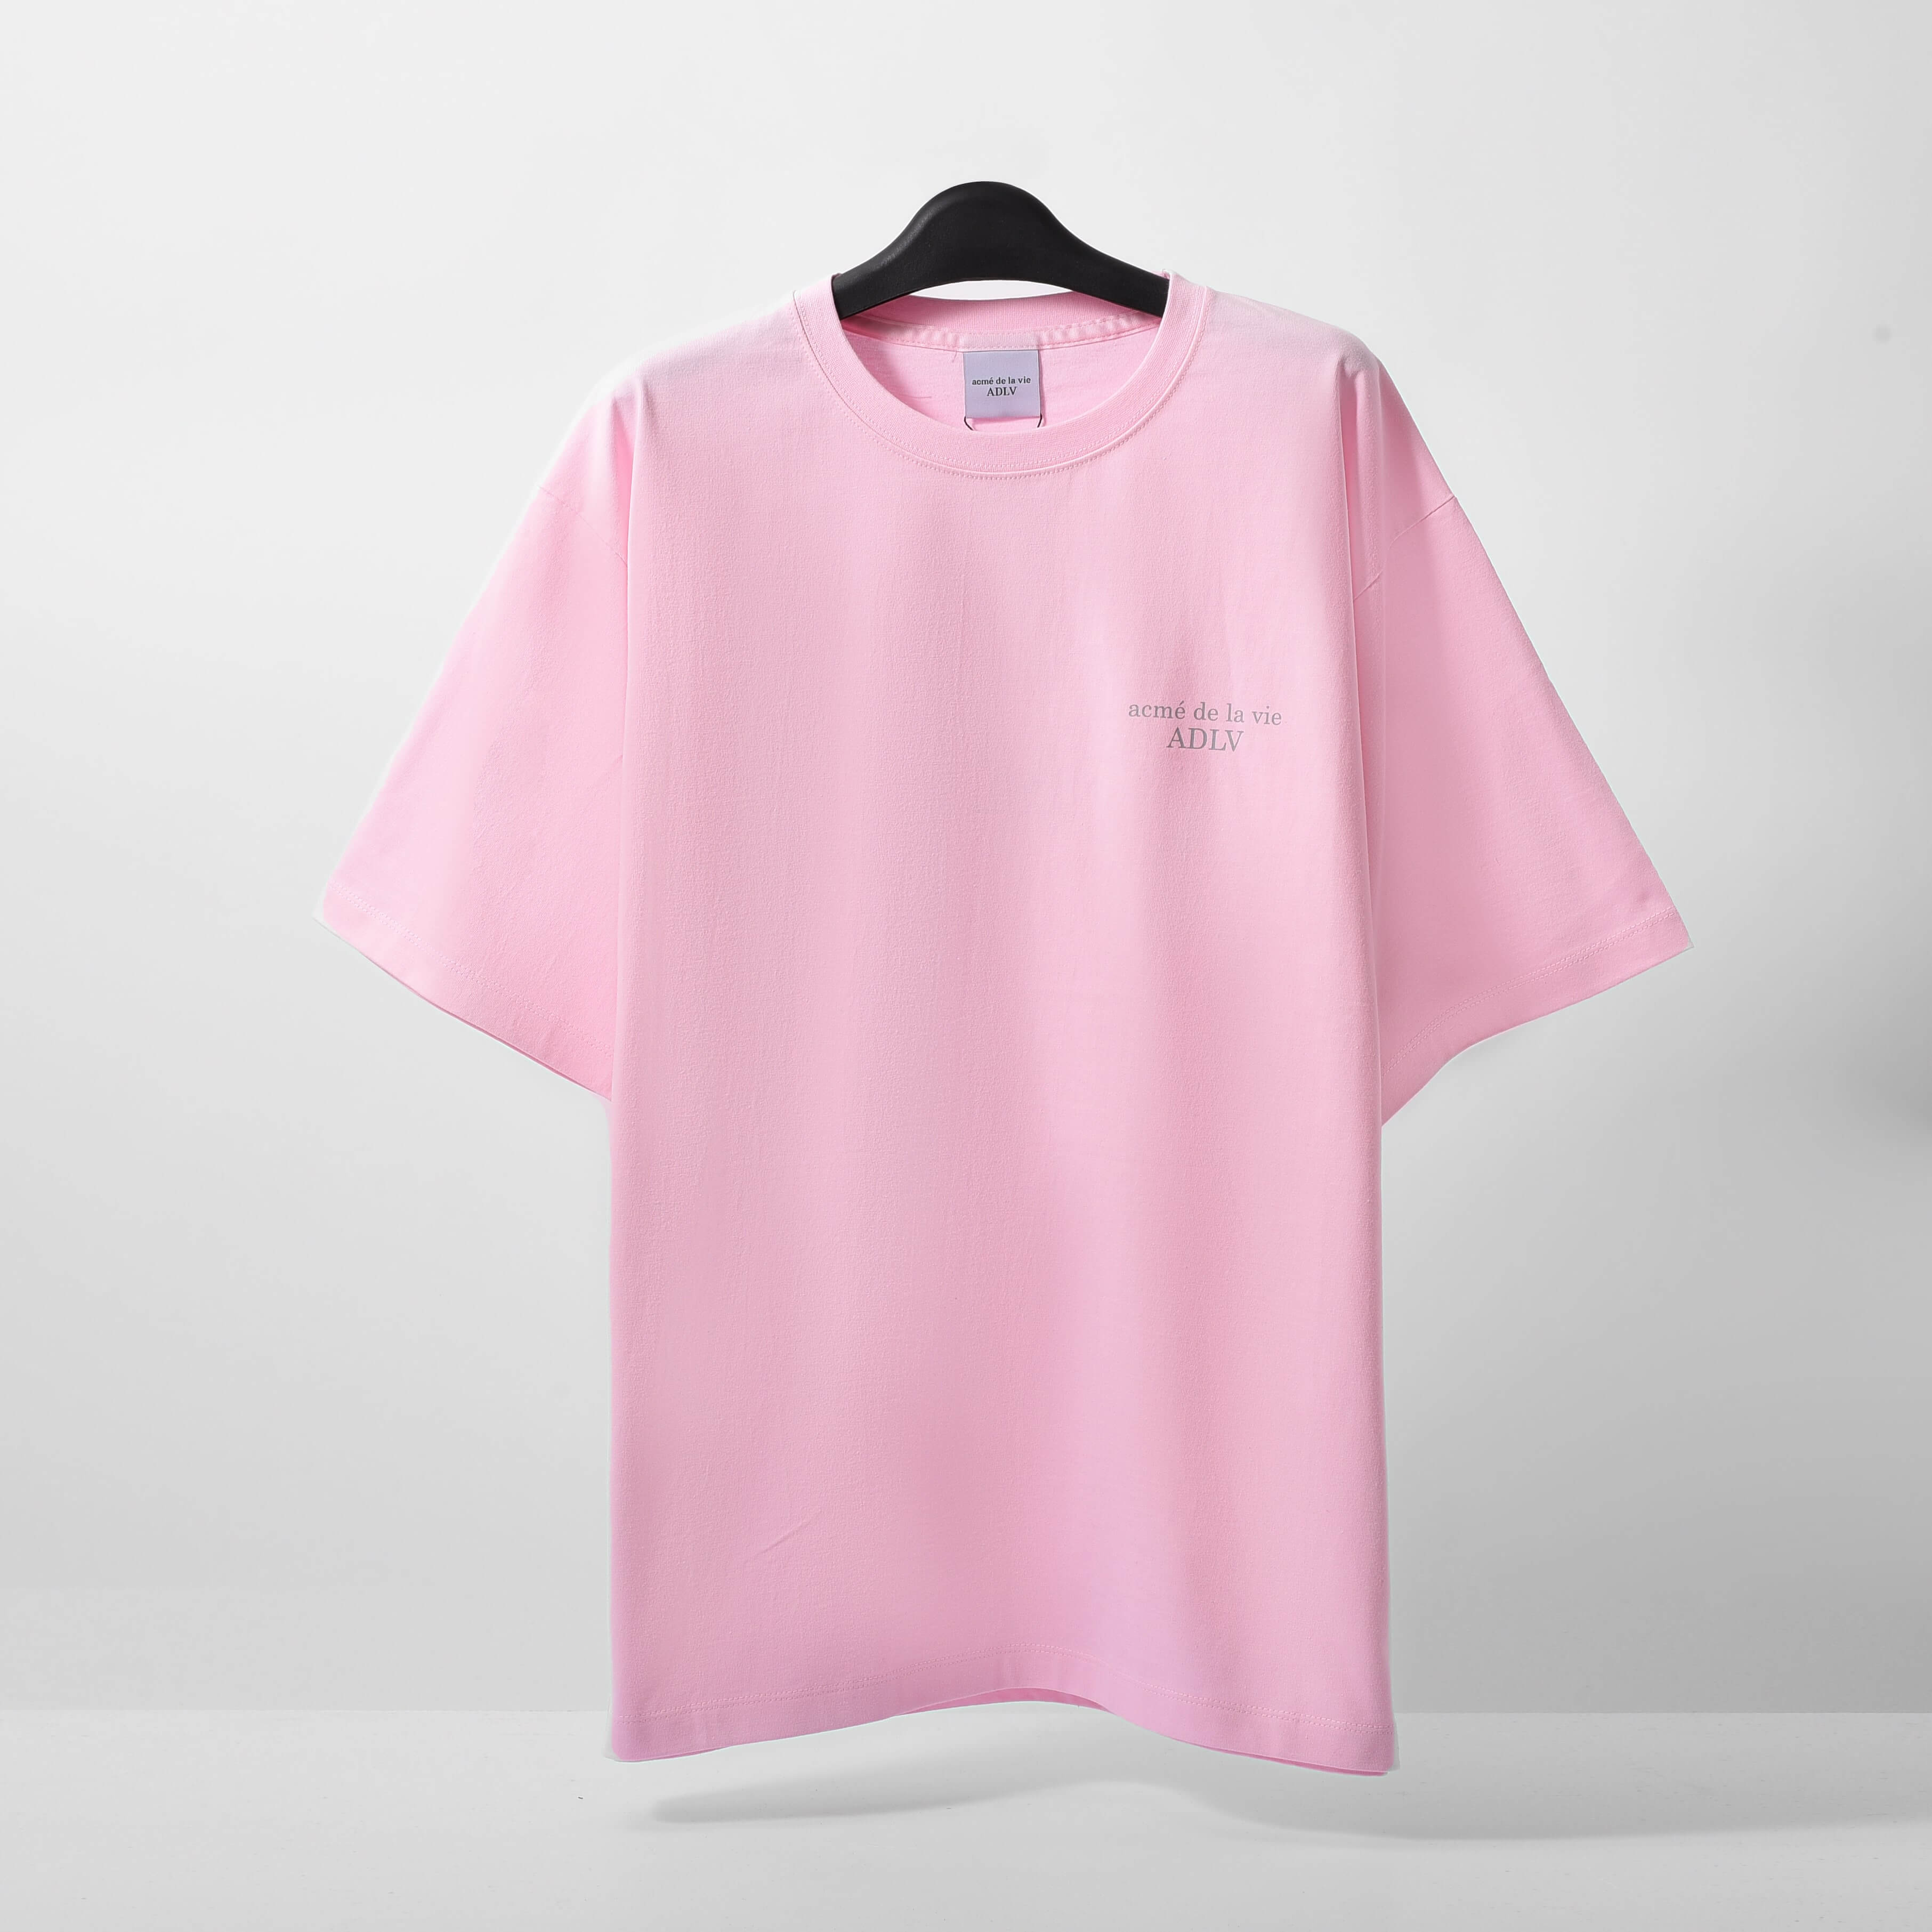 ADLV Basic Tshirt - Candy Pink